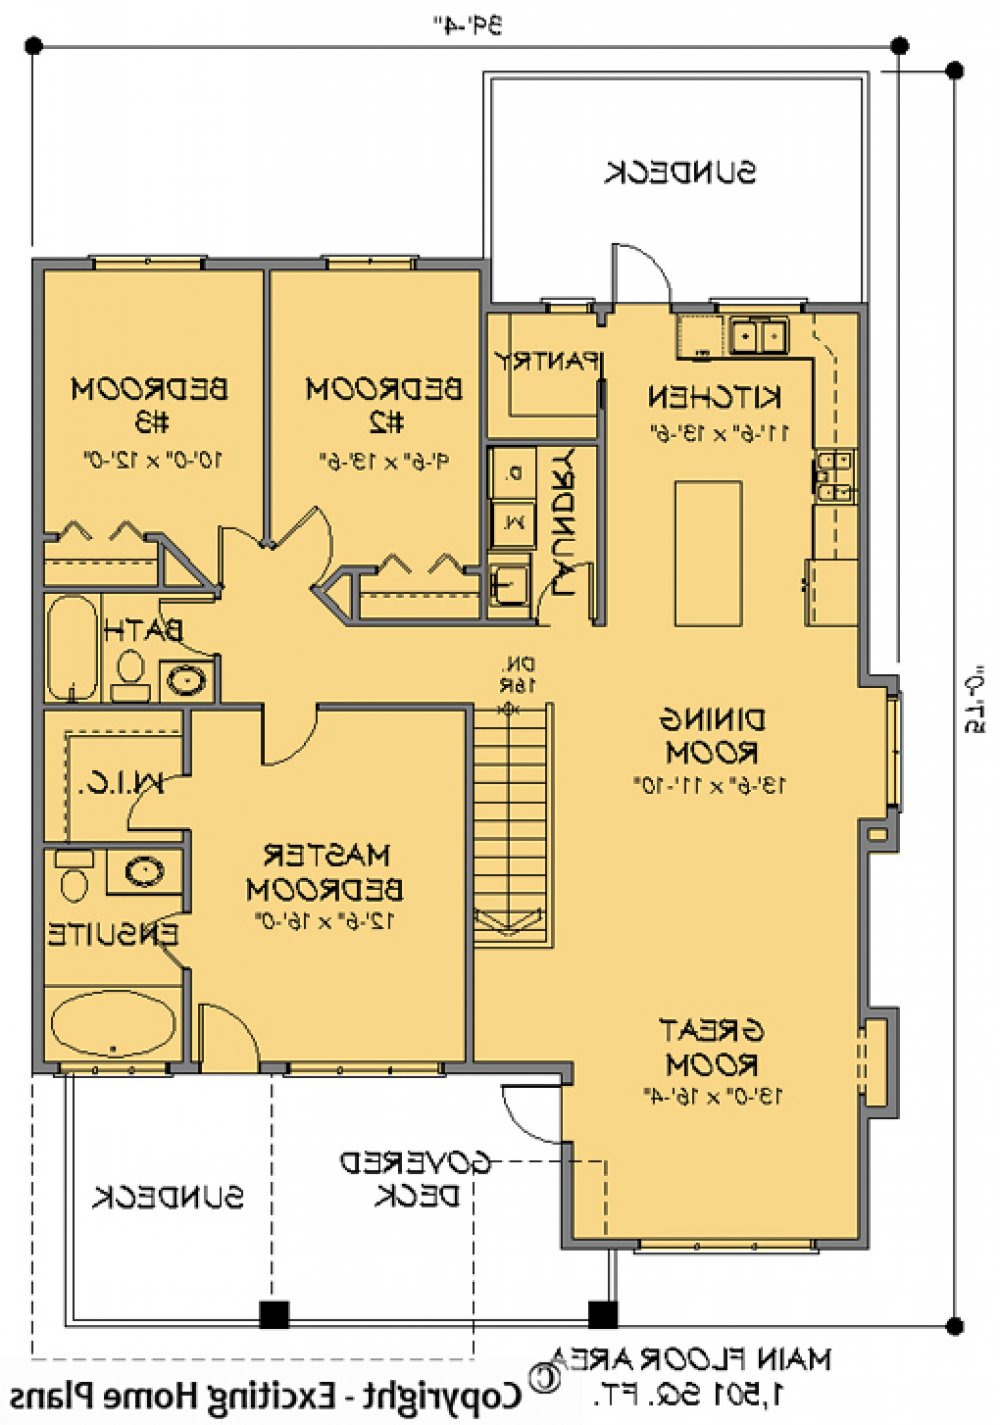 House Plan E1091-10 Main Floor Plan REVERSE